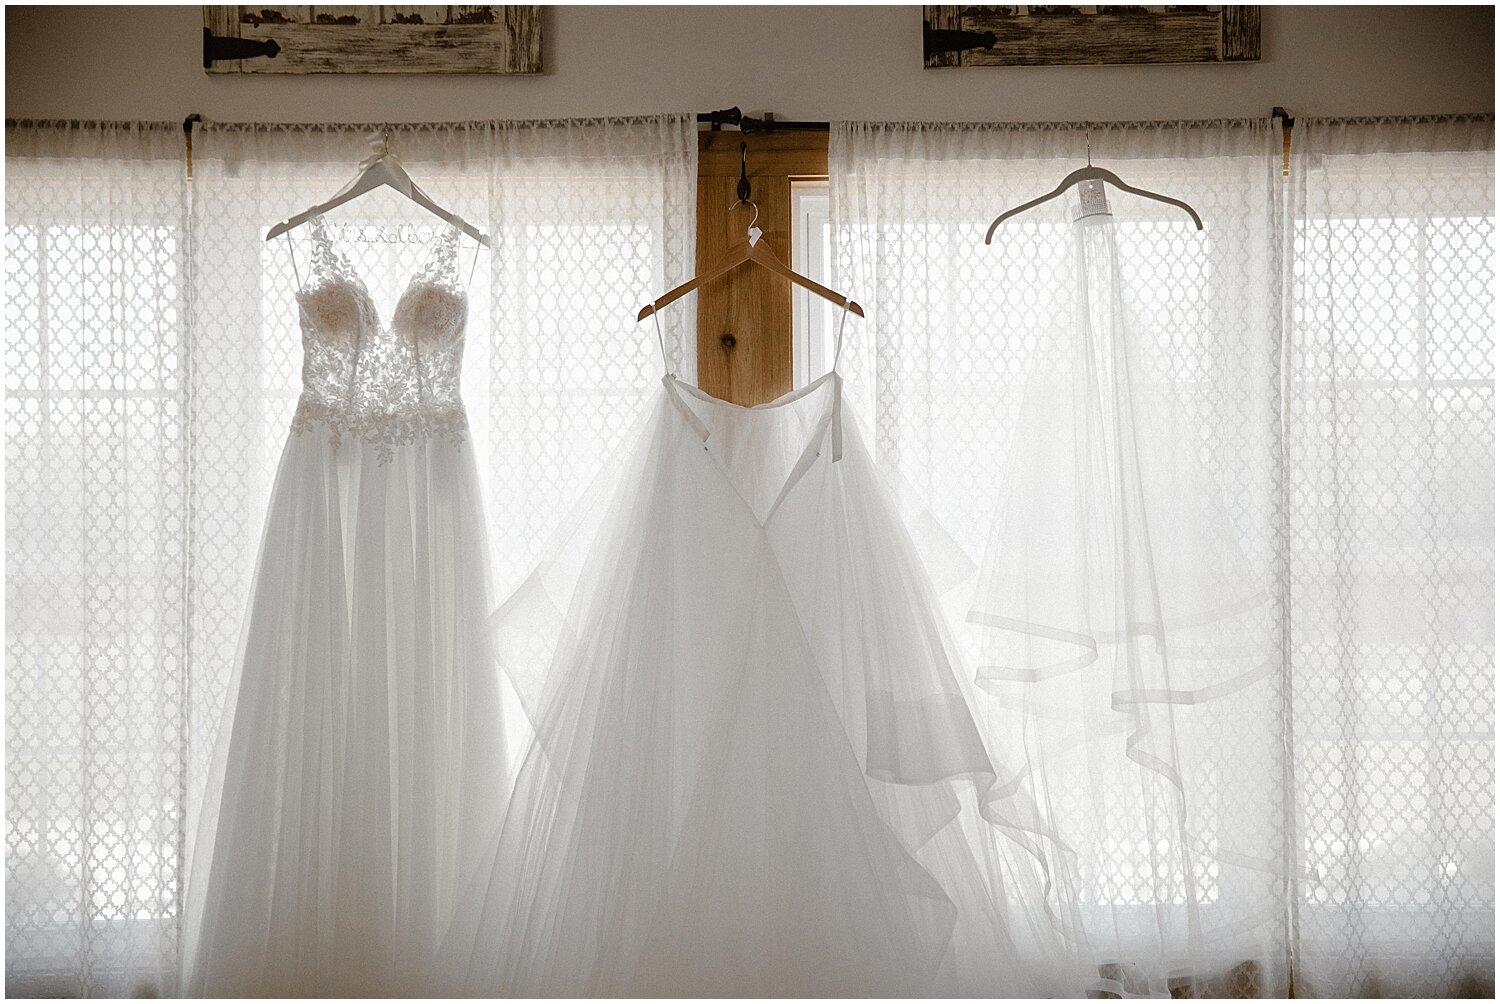  bride’s wedding dress and wedding veil 